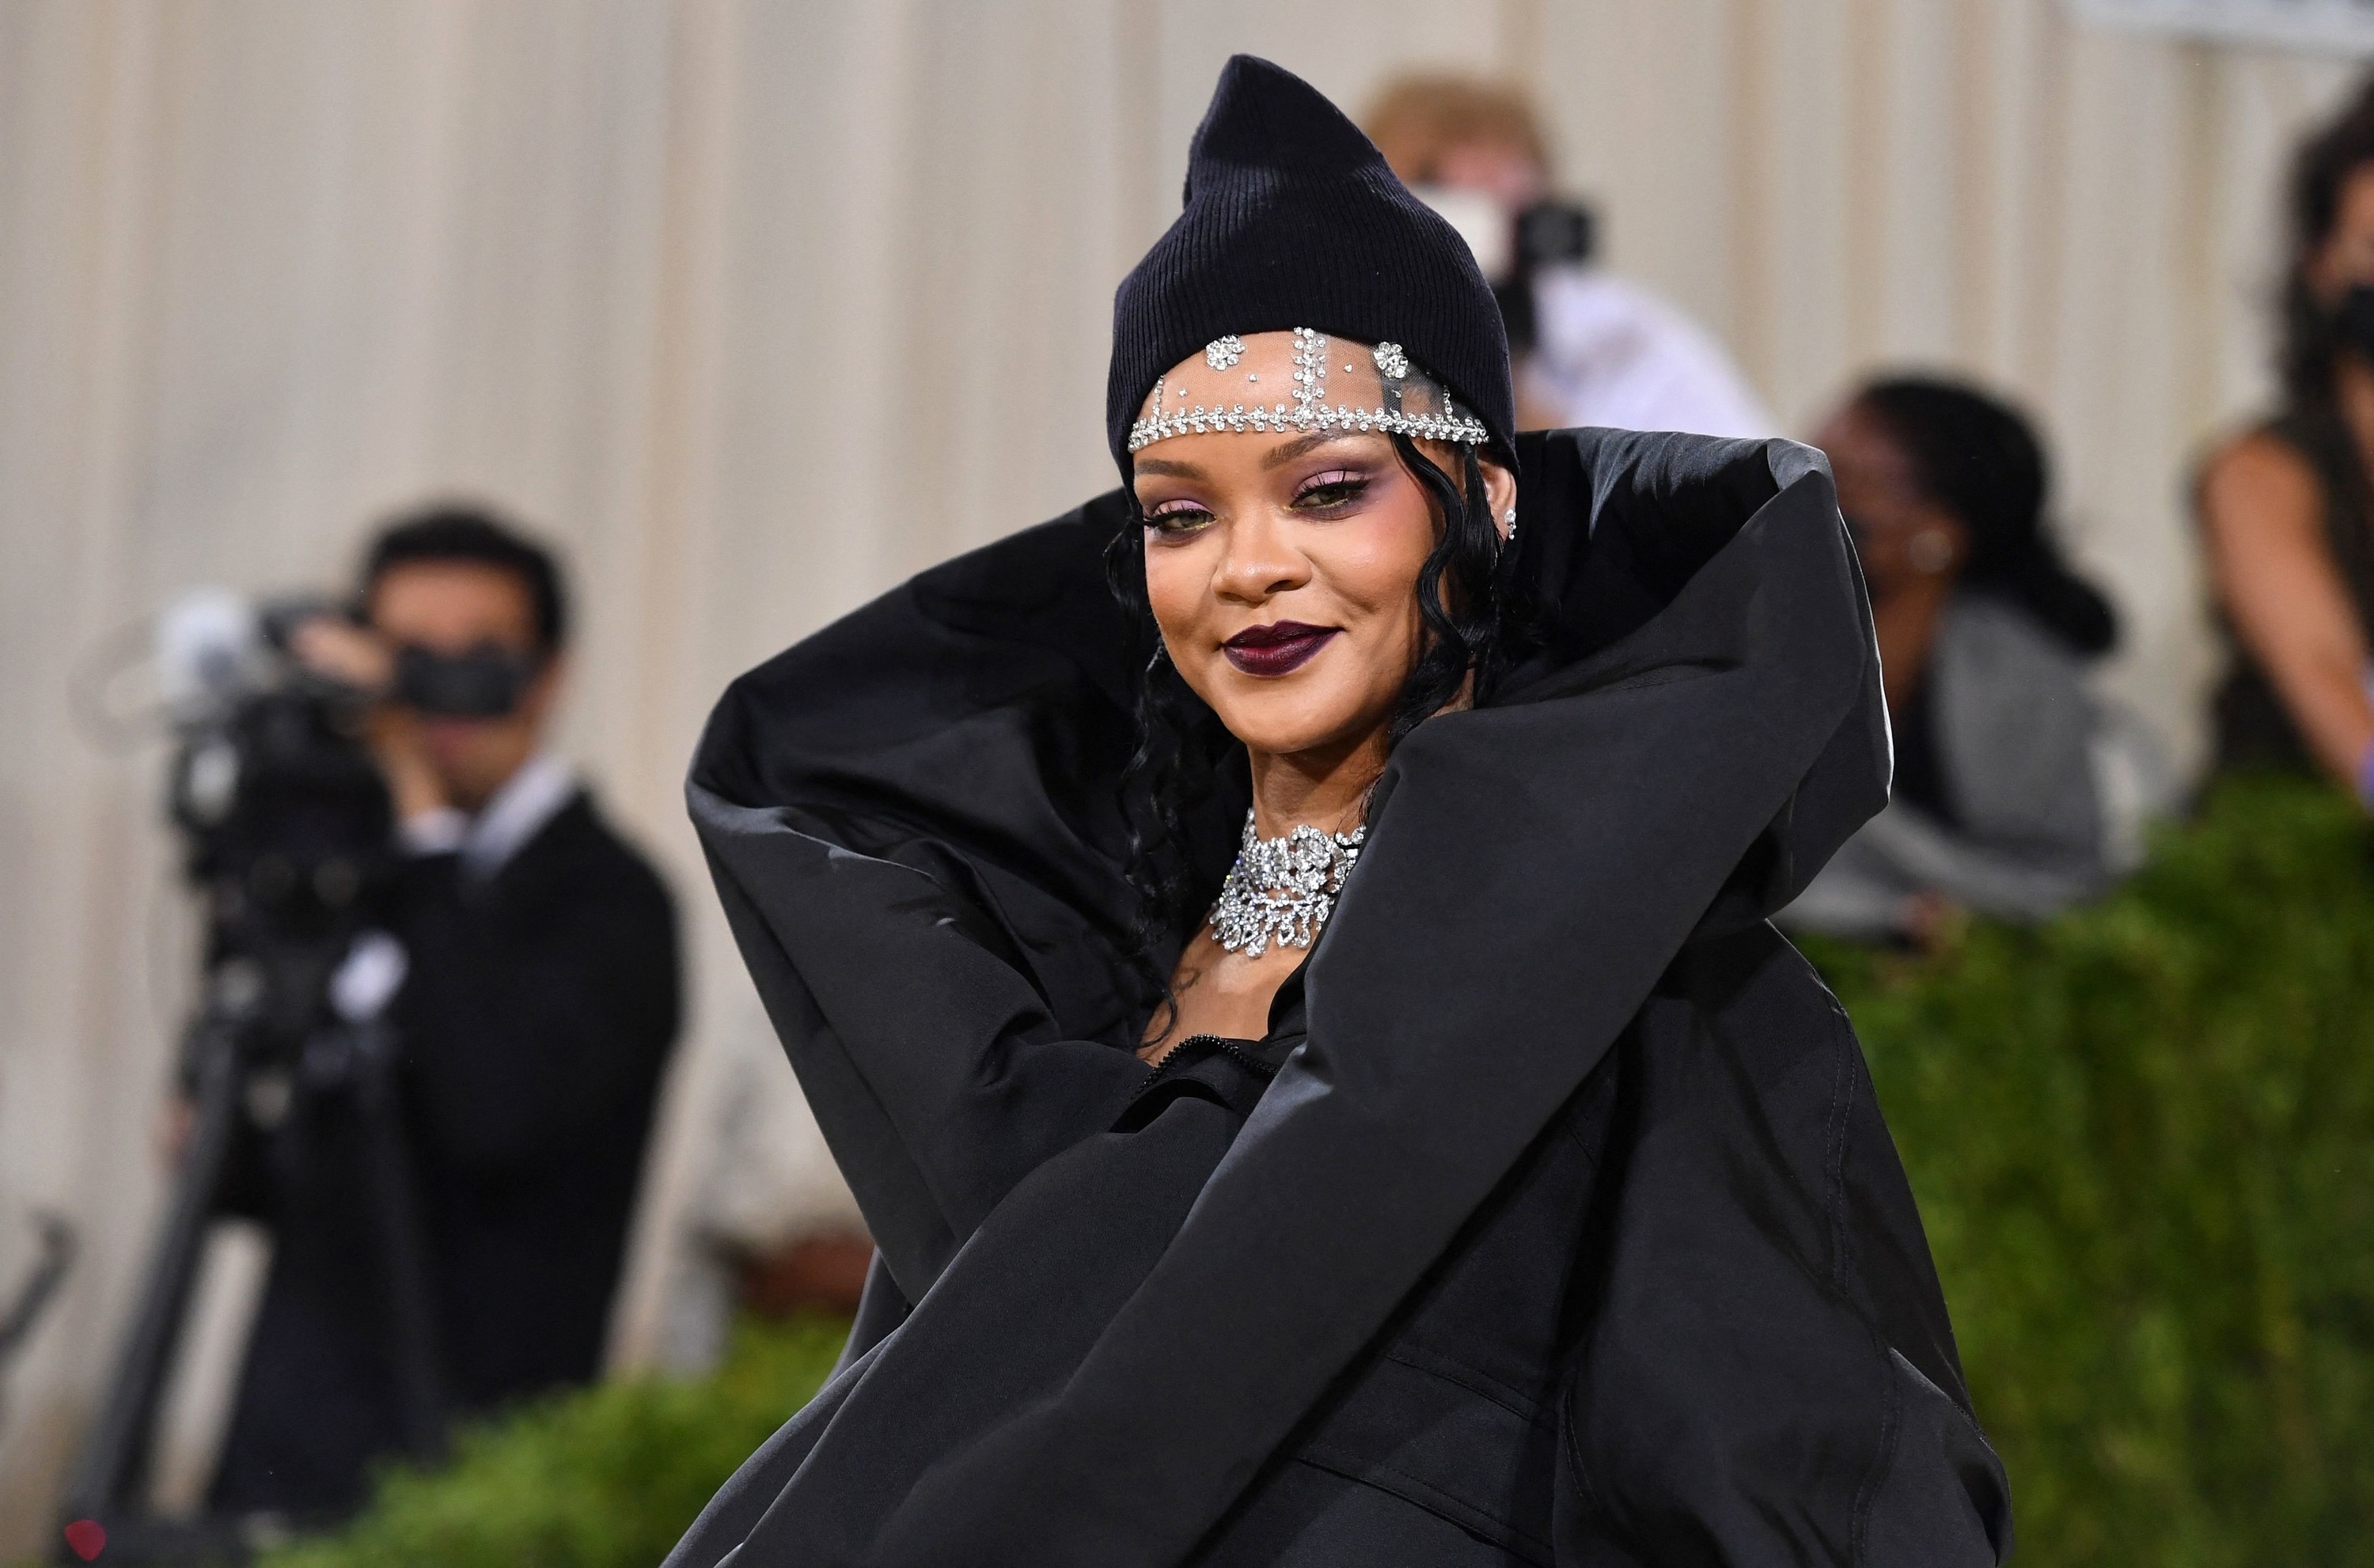 Rihanna posing at the 2021 Met Gala red carpet